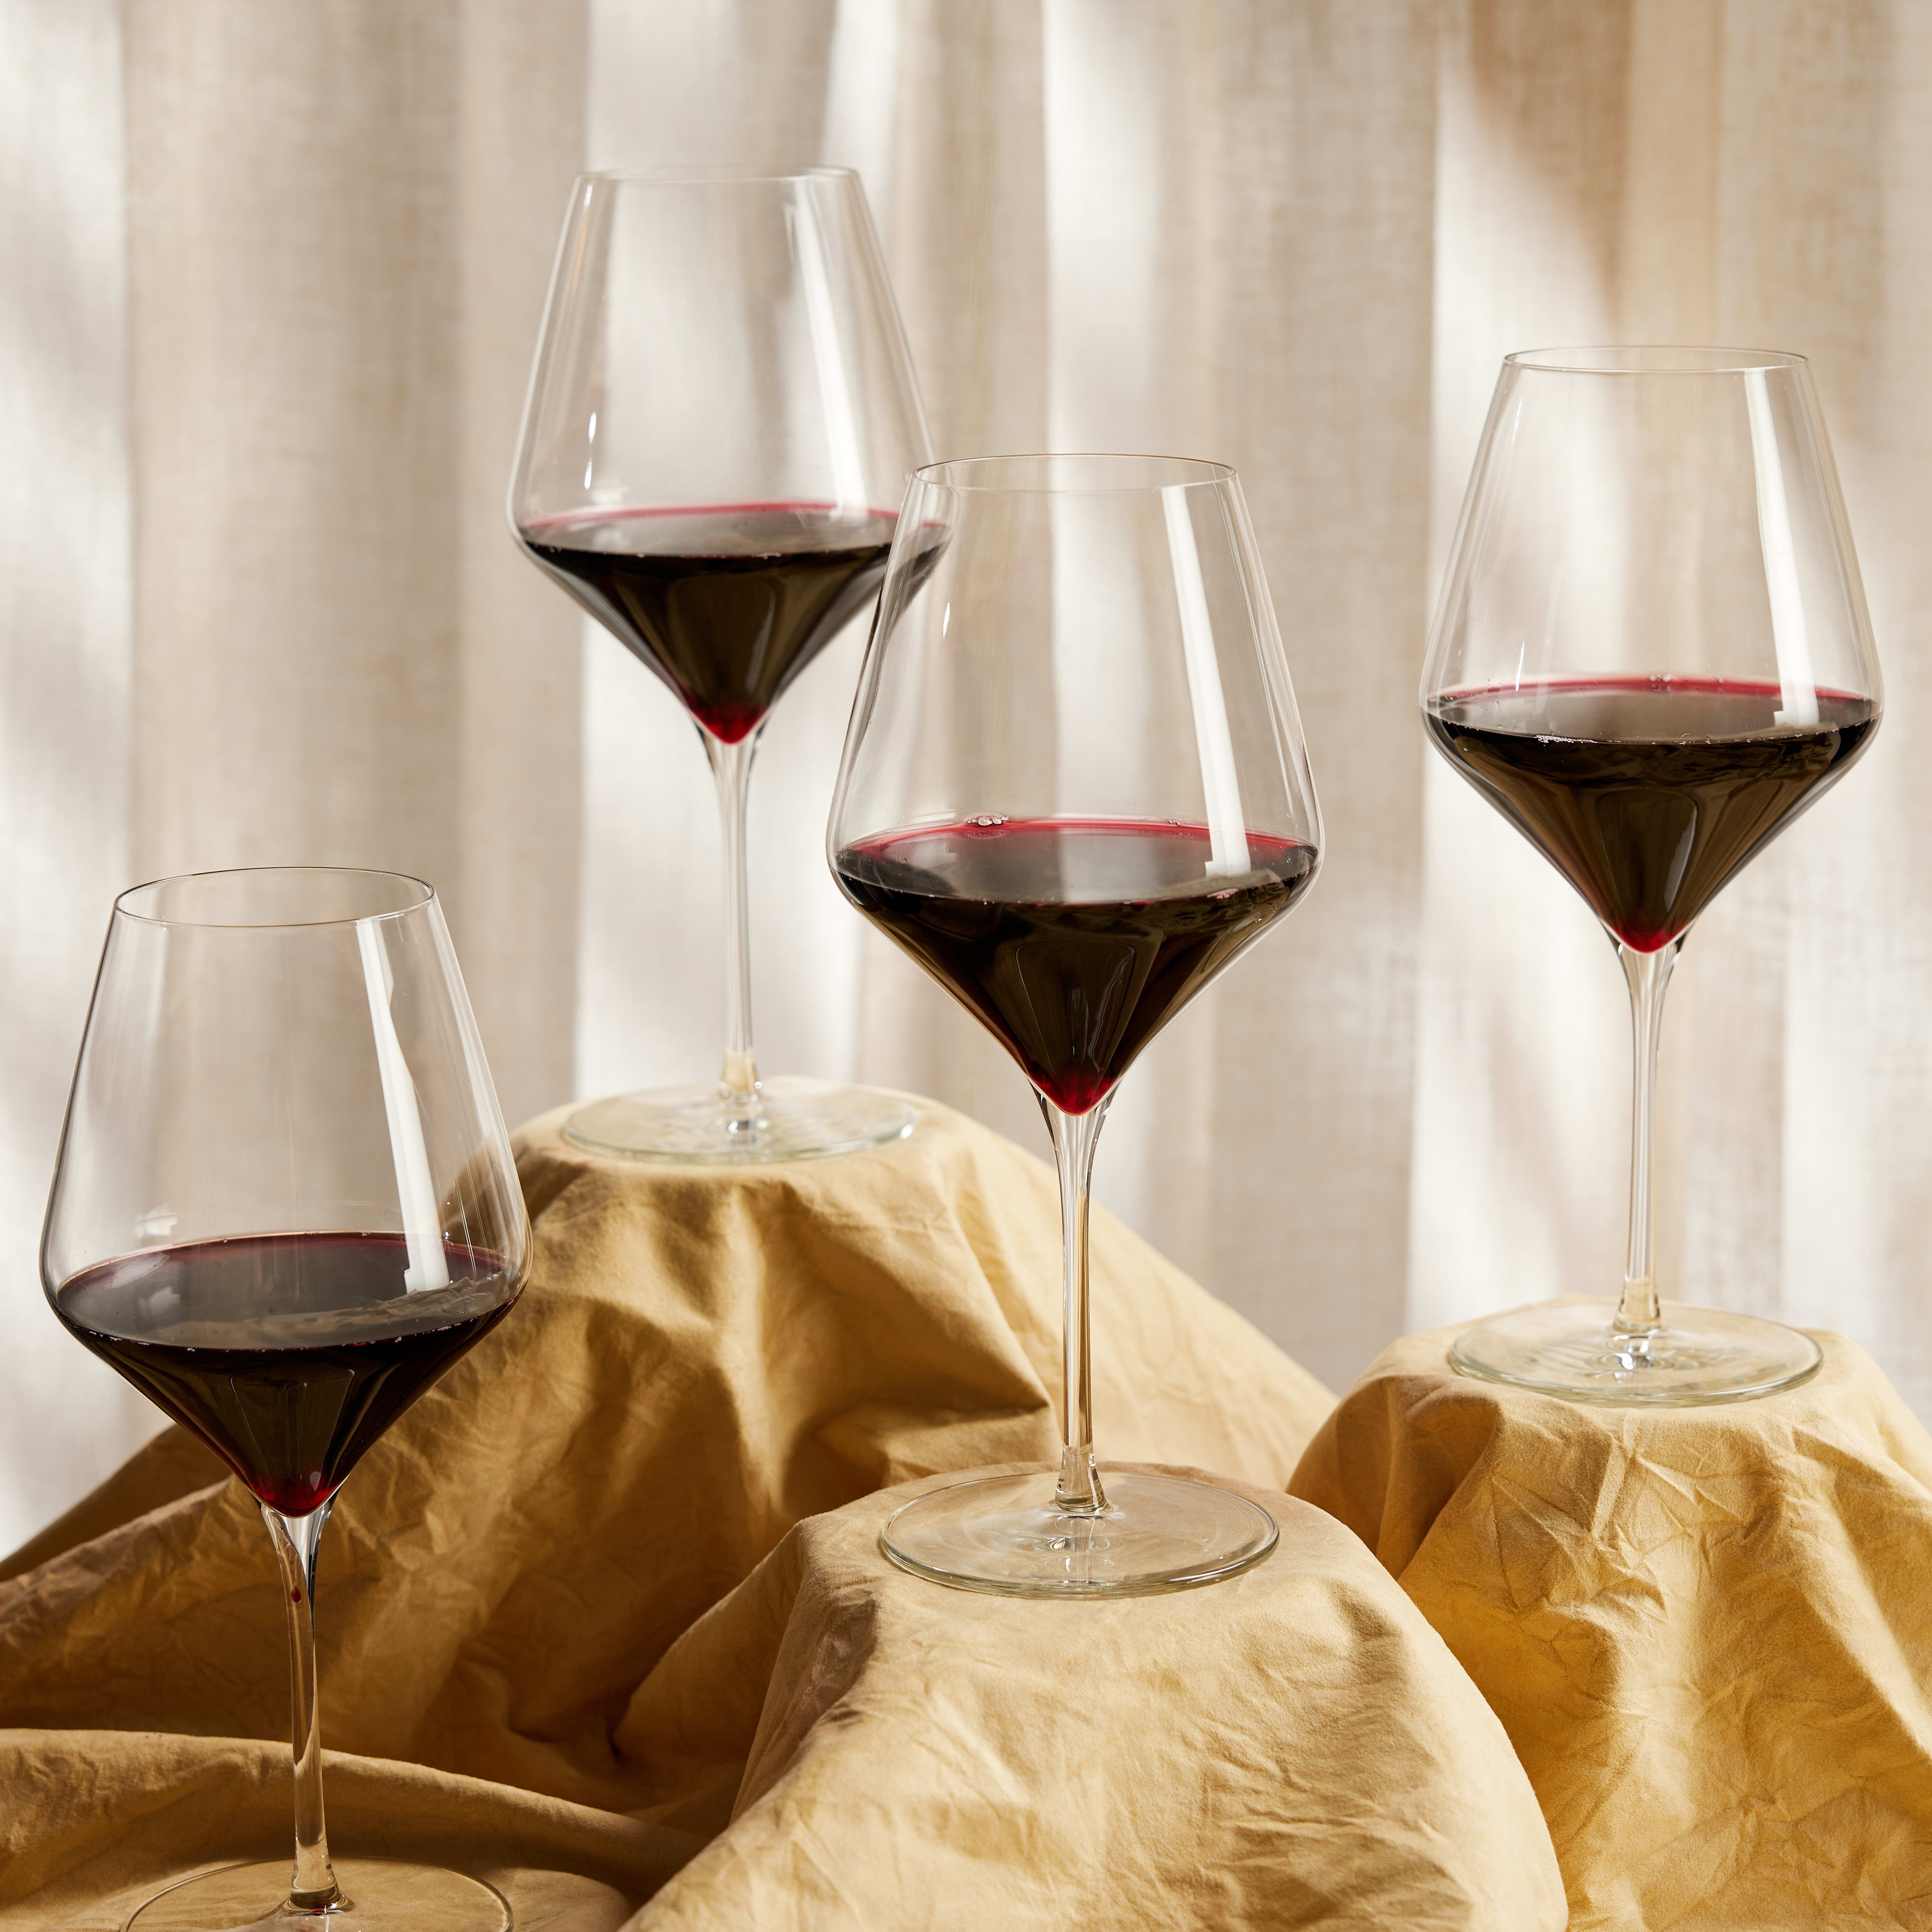 Chef's Star 15oz Stemless Wine Glasses Set Classic Durable Wine